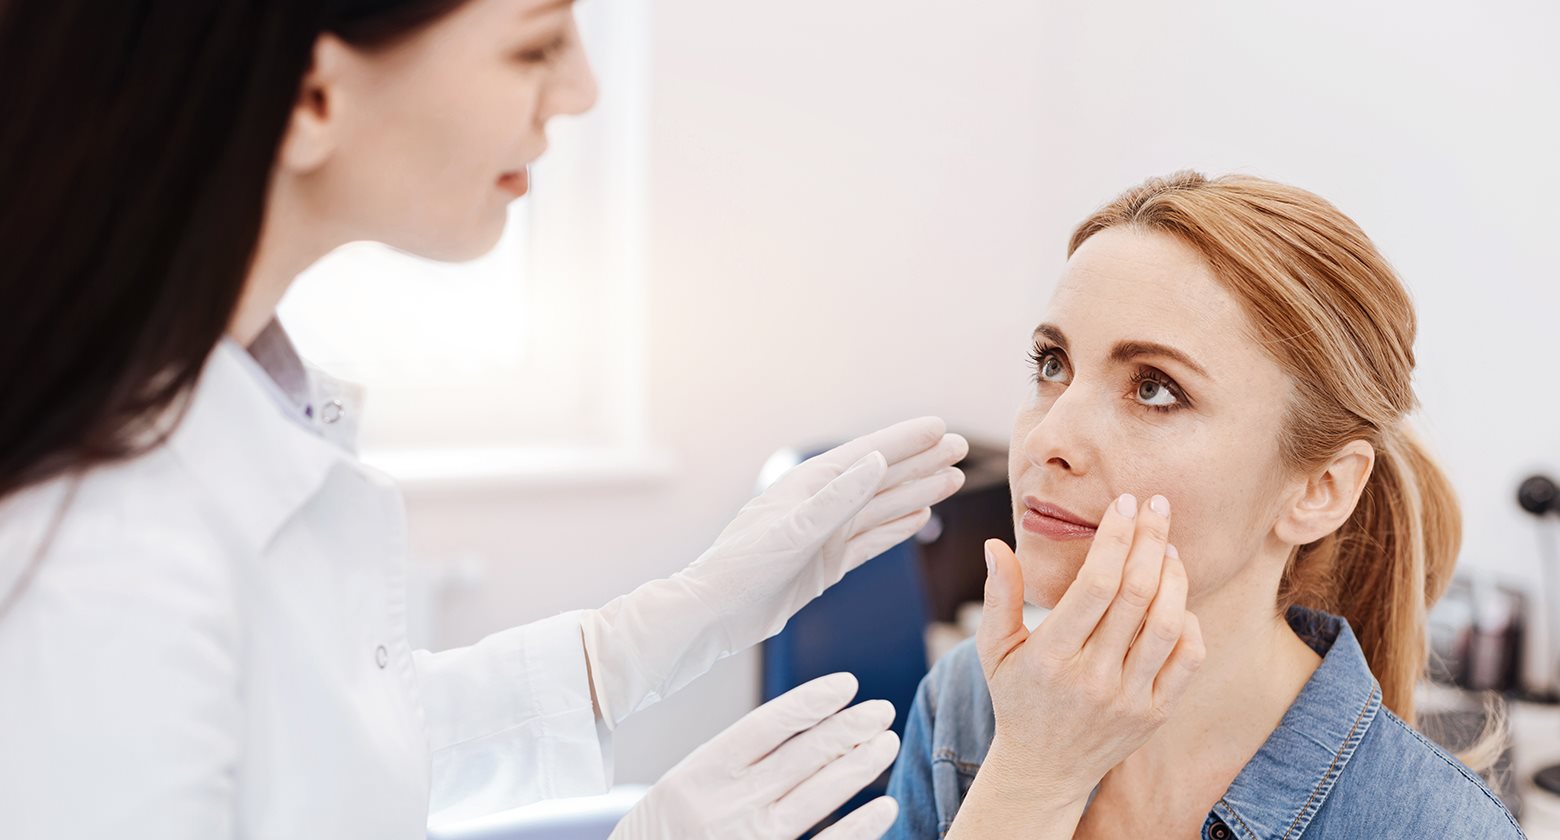 Acne doctor examining skin